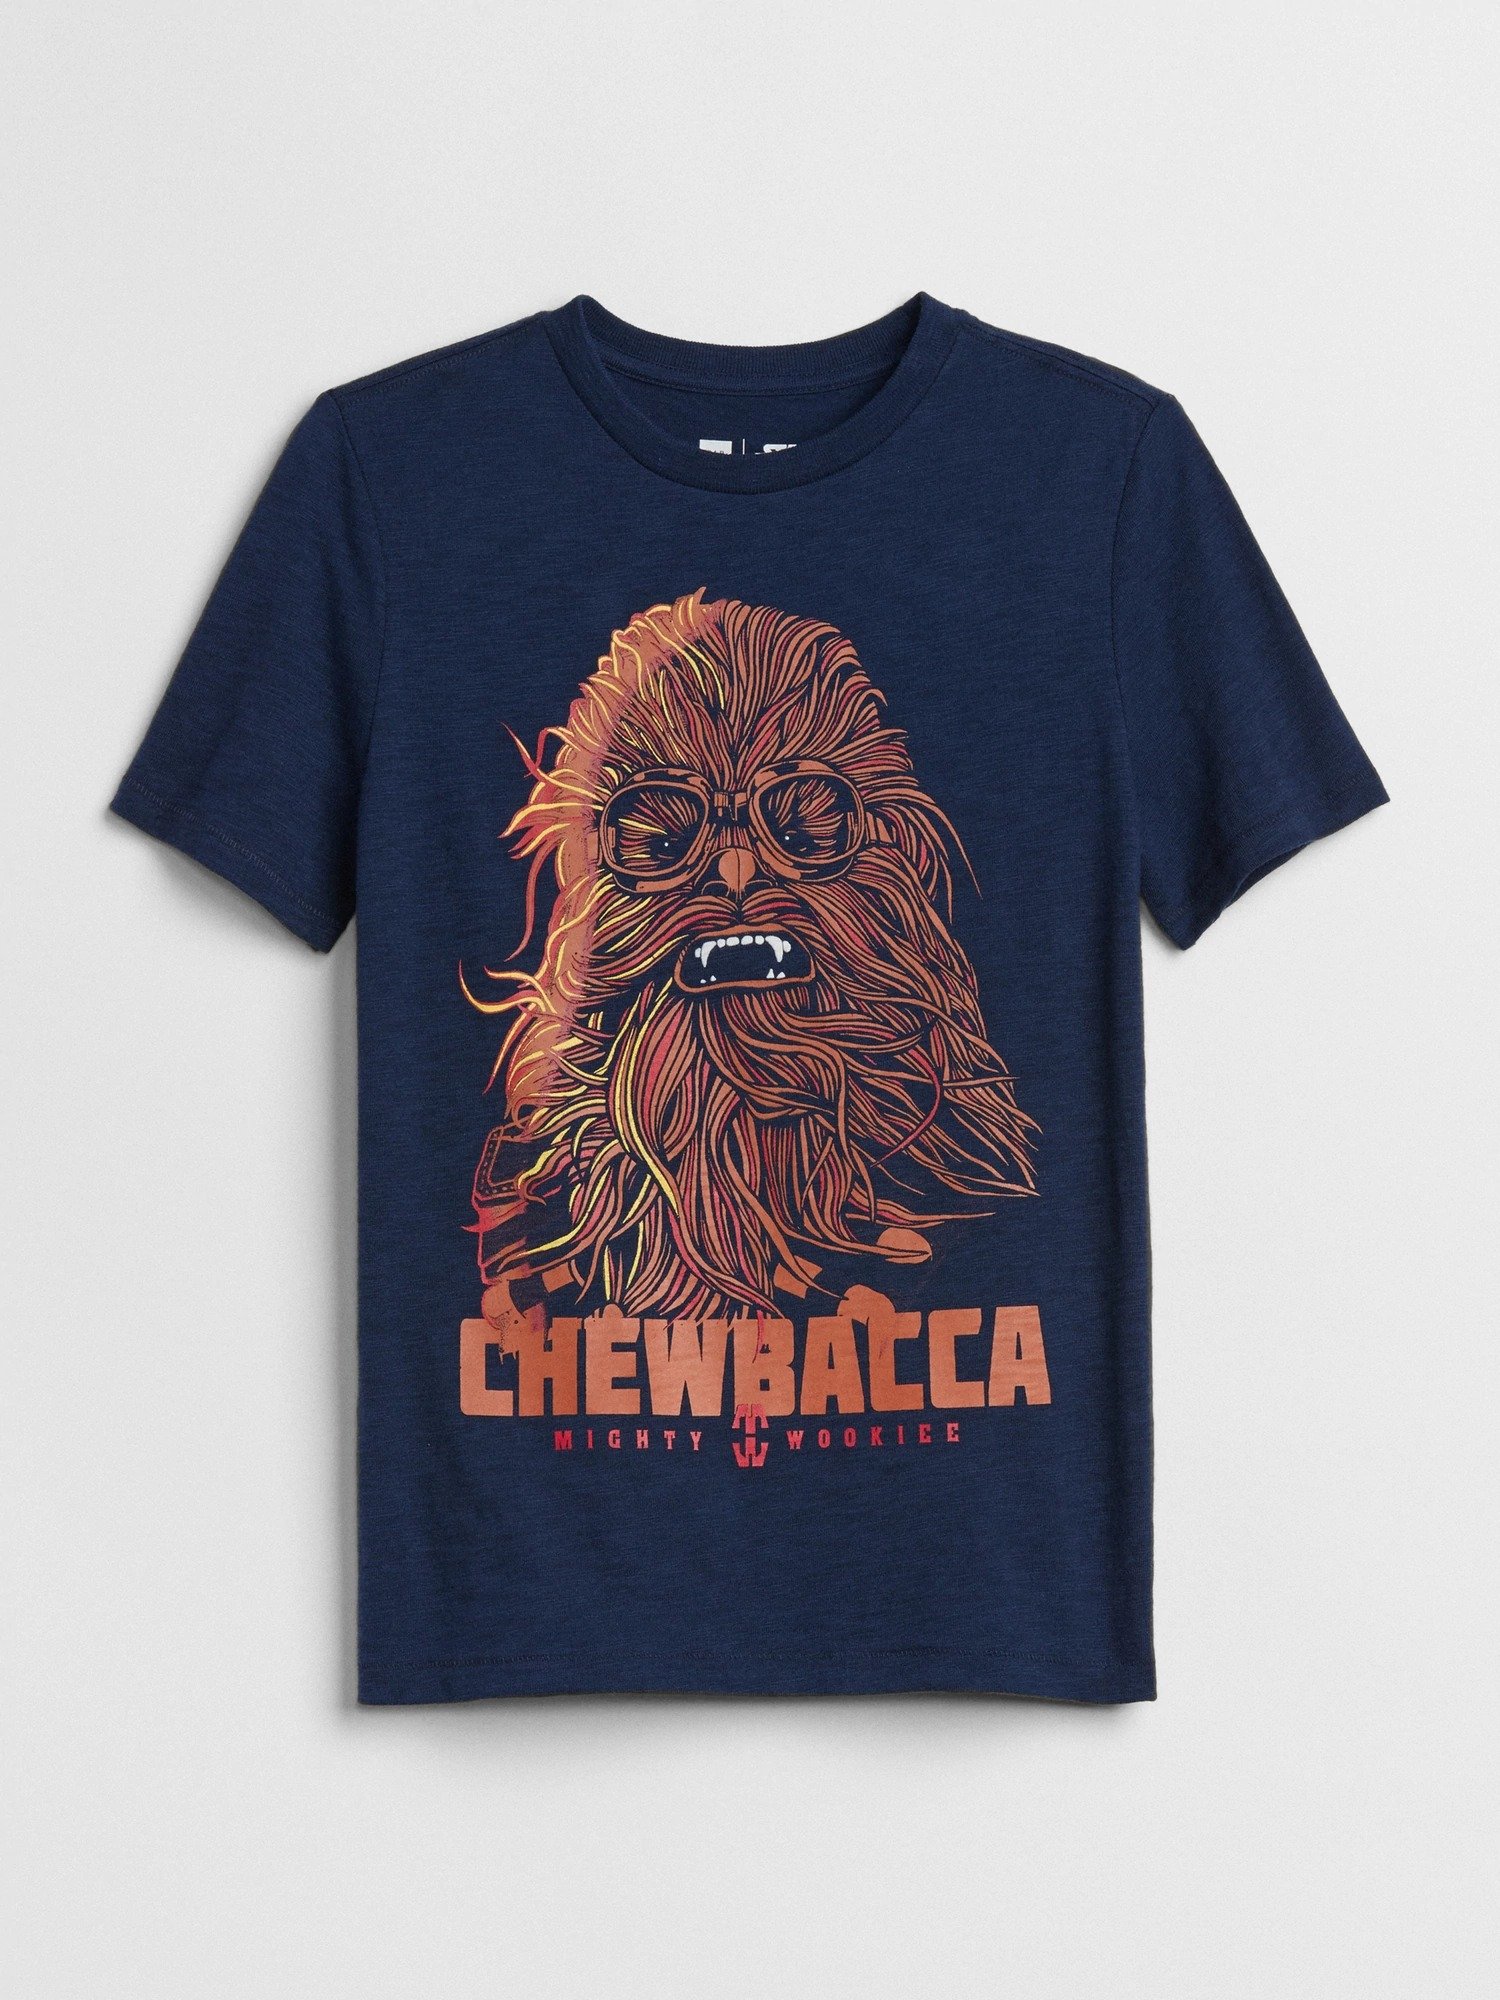 GapKids | Star Wars™ t-shirt product image